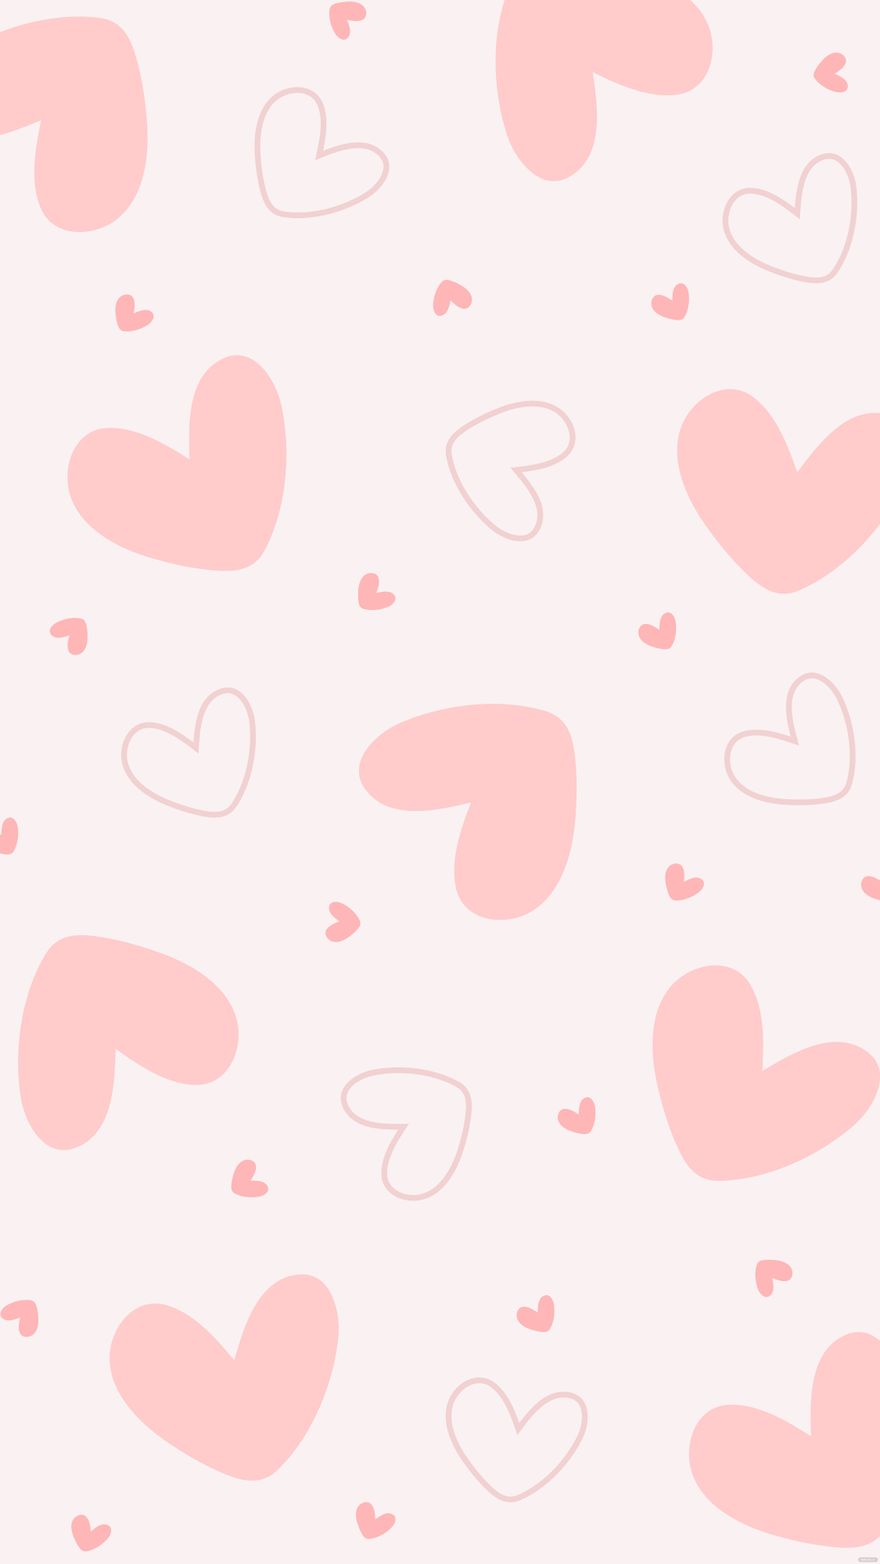 Free Pastel Pink Heart Background